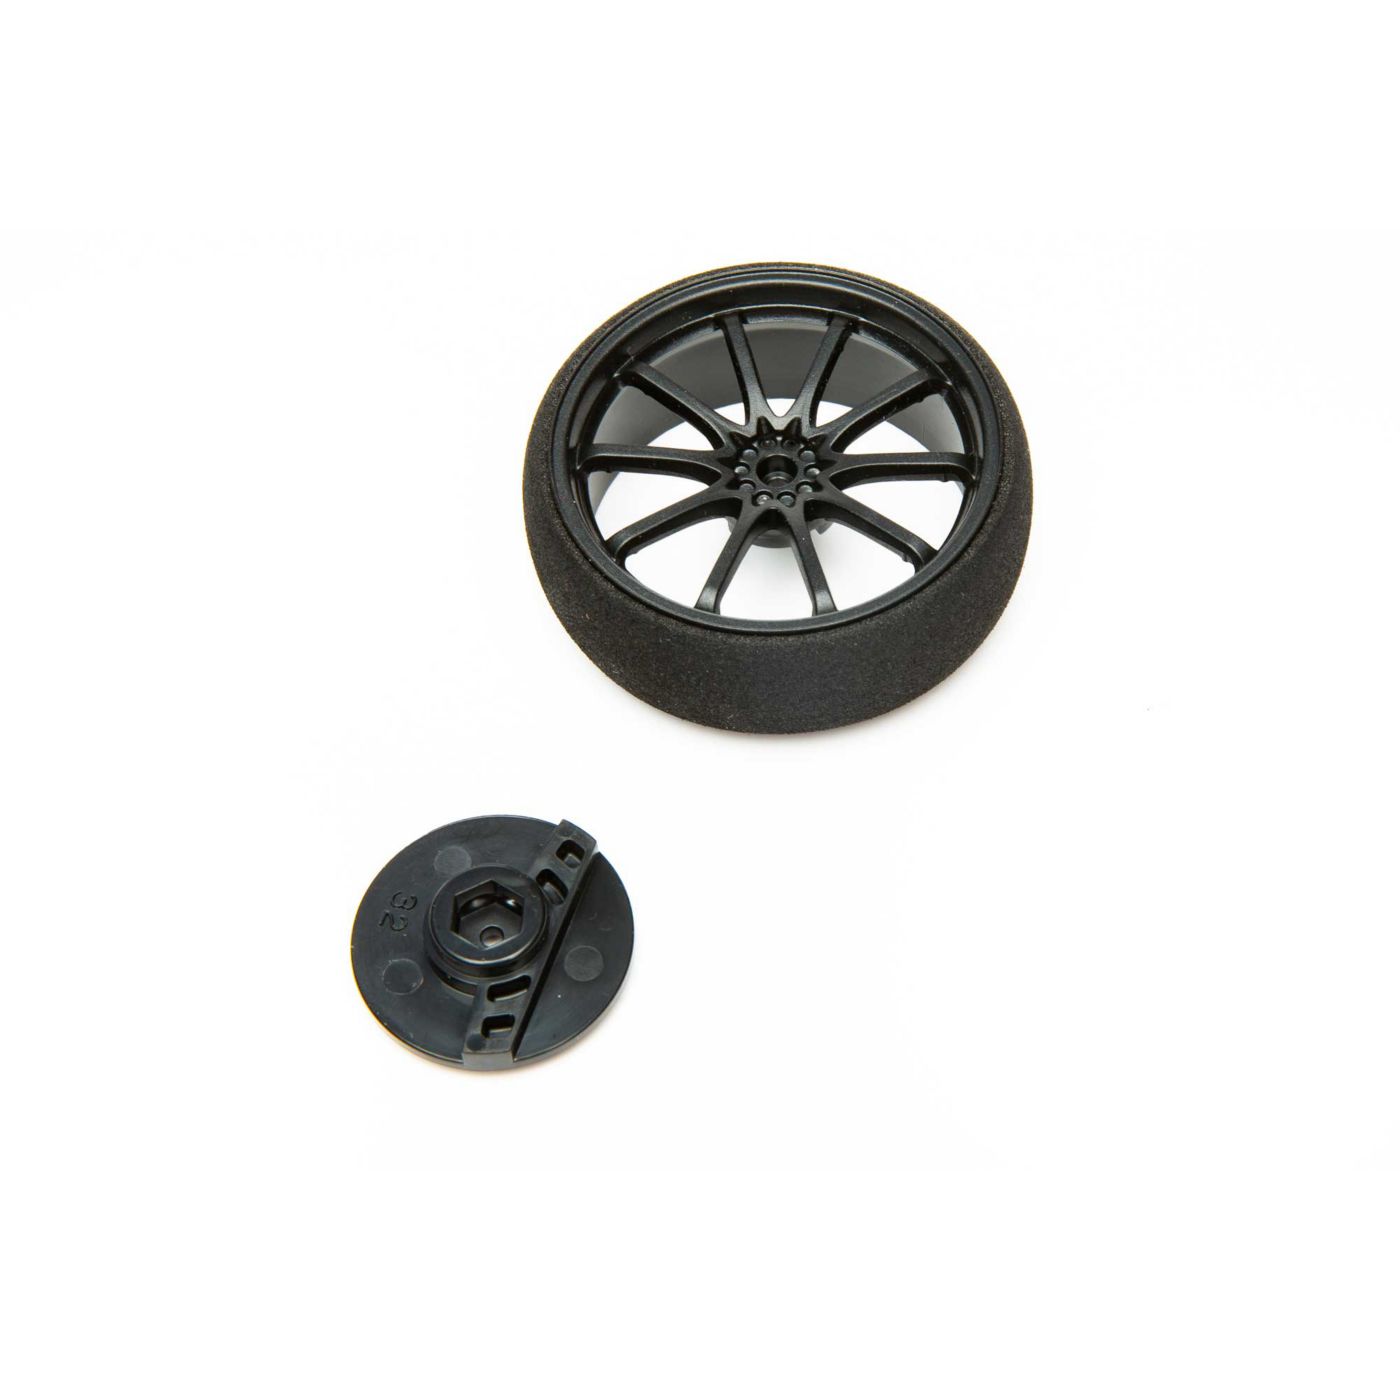 Spektrum Large Wheel - Black DX5Pro 6R 5C SPM9061